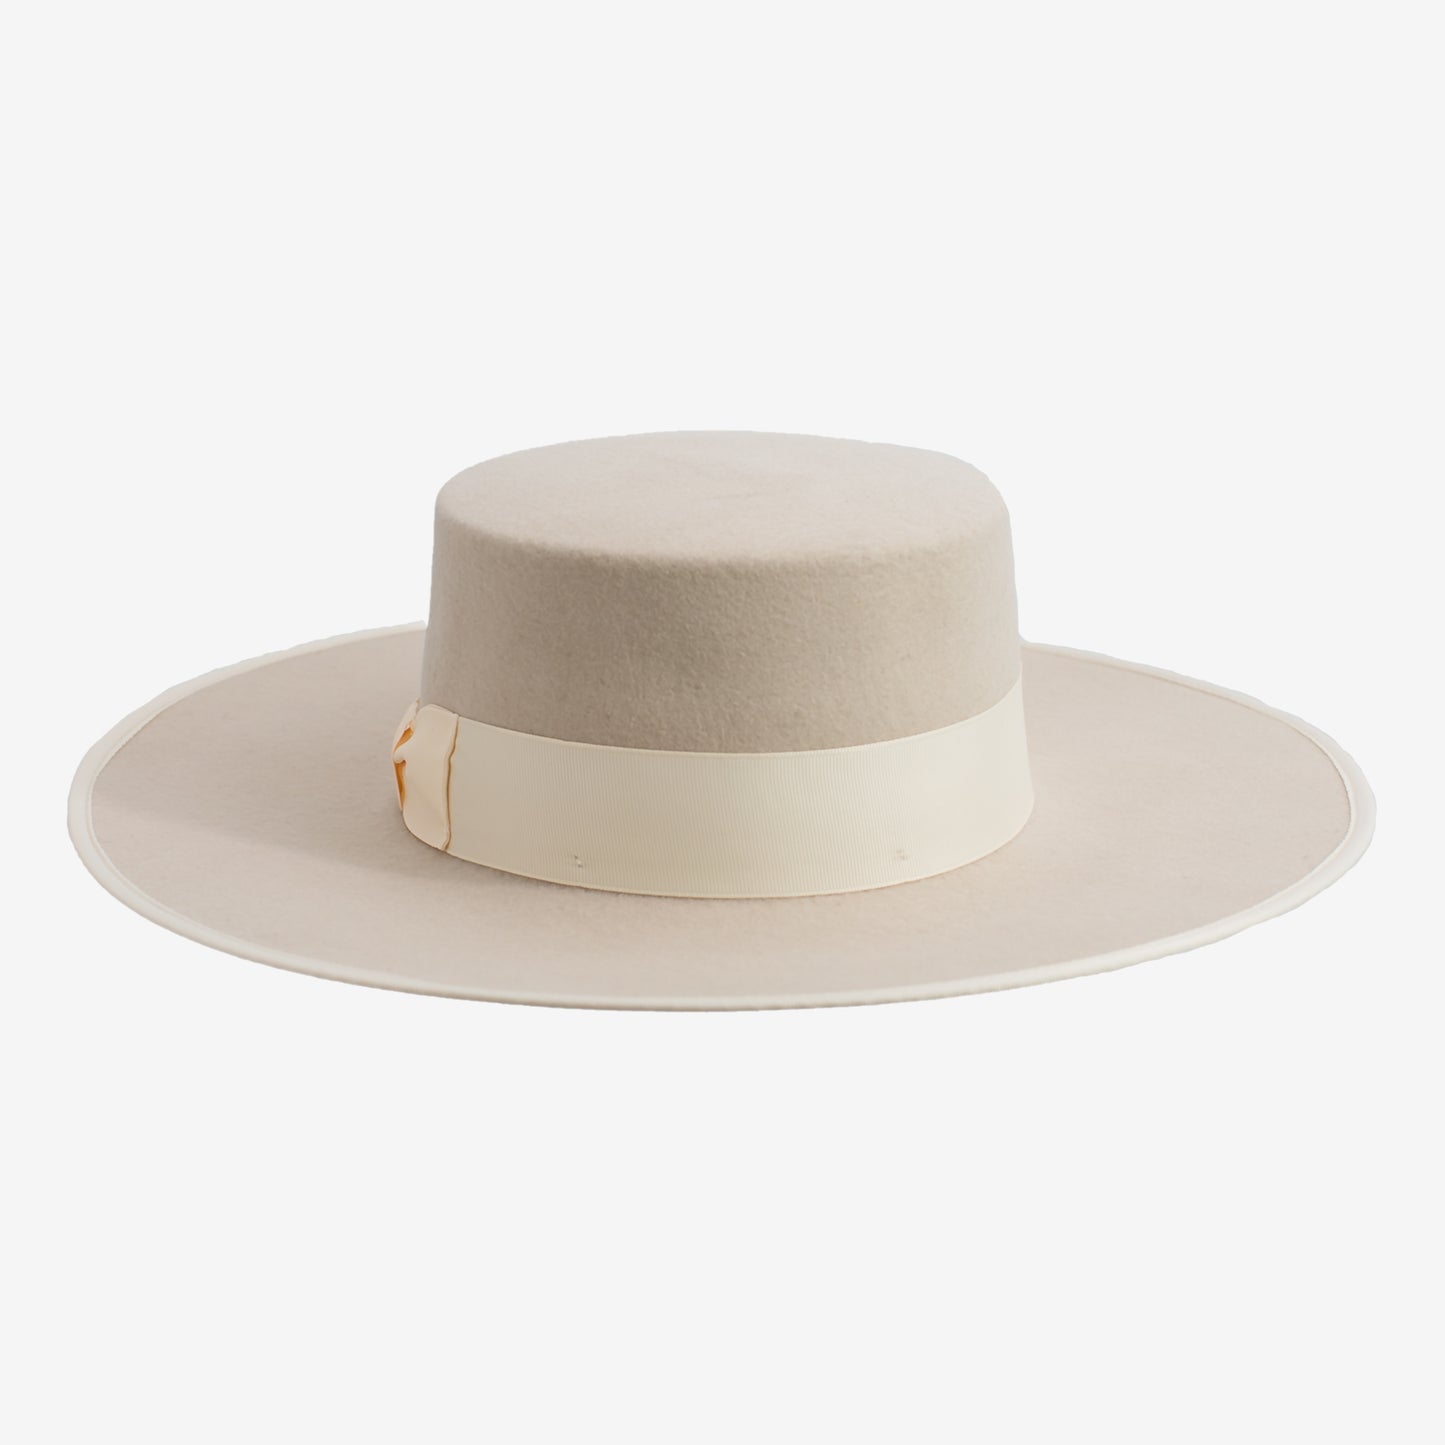 mindo-hats-claudia-cordobes-wool-hat-cream-front